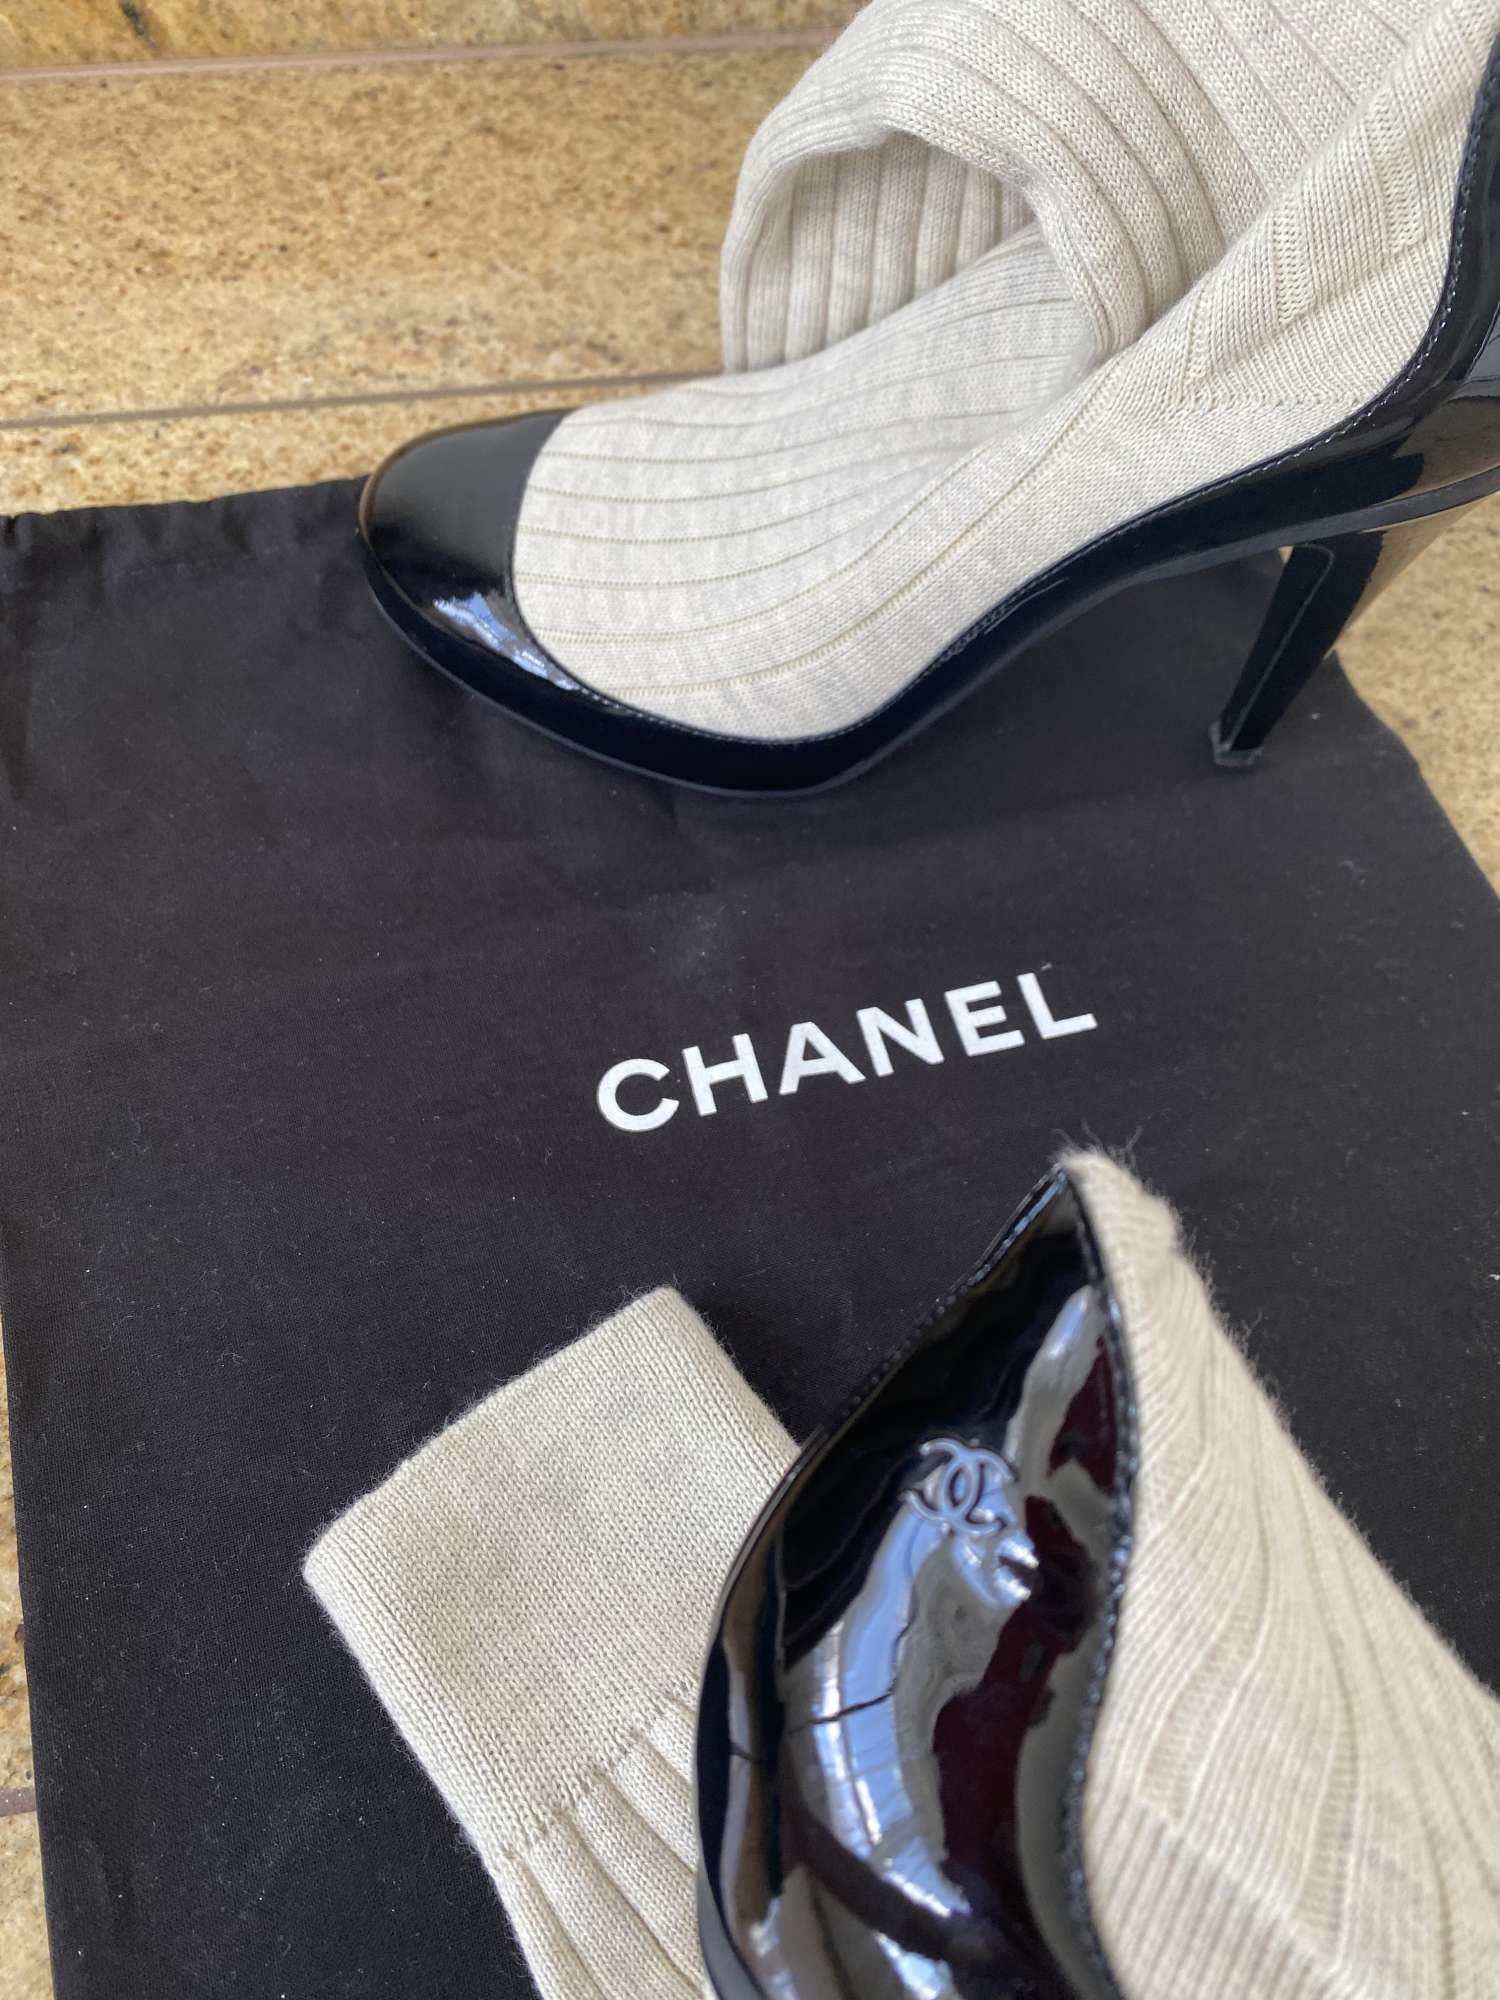 Chanel topanky